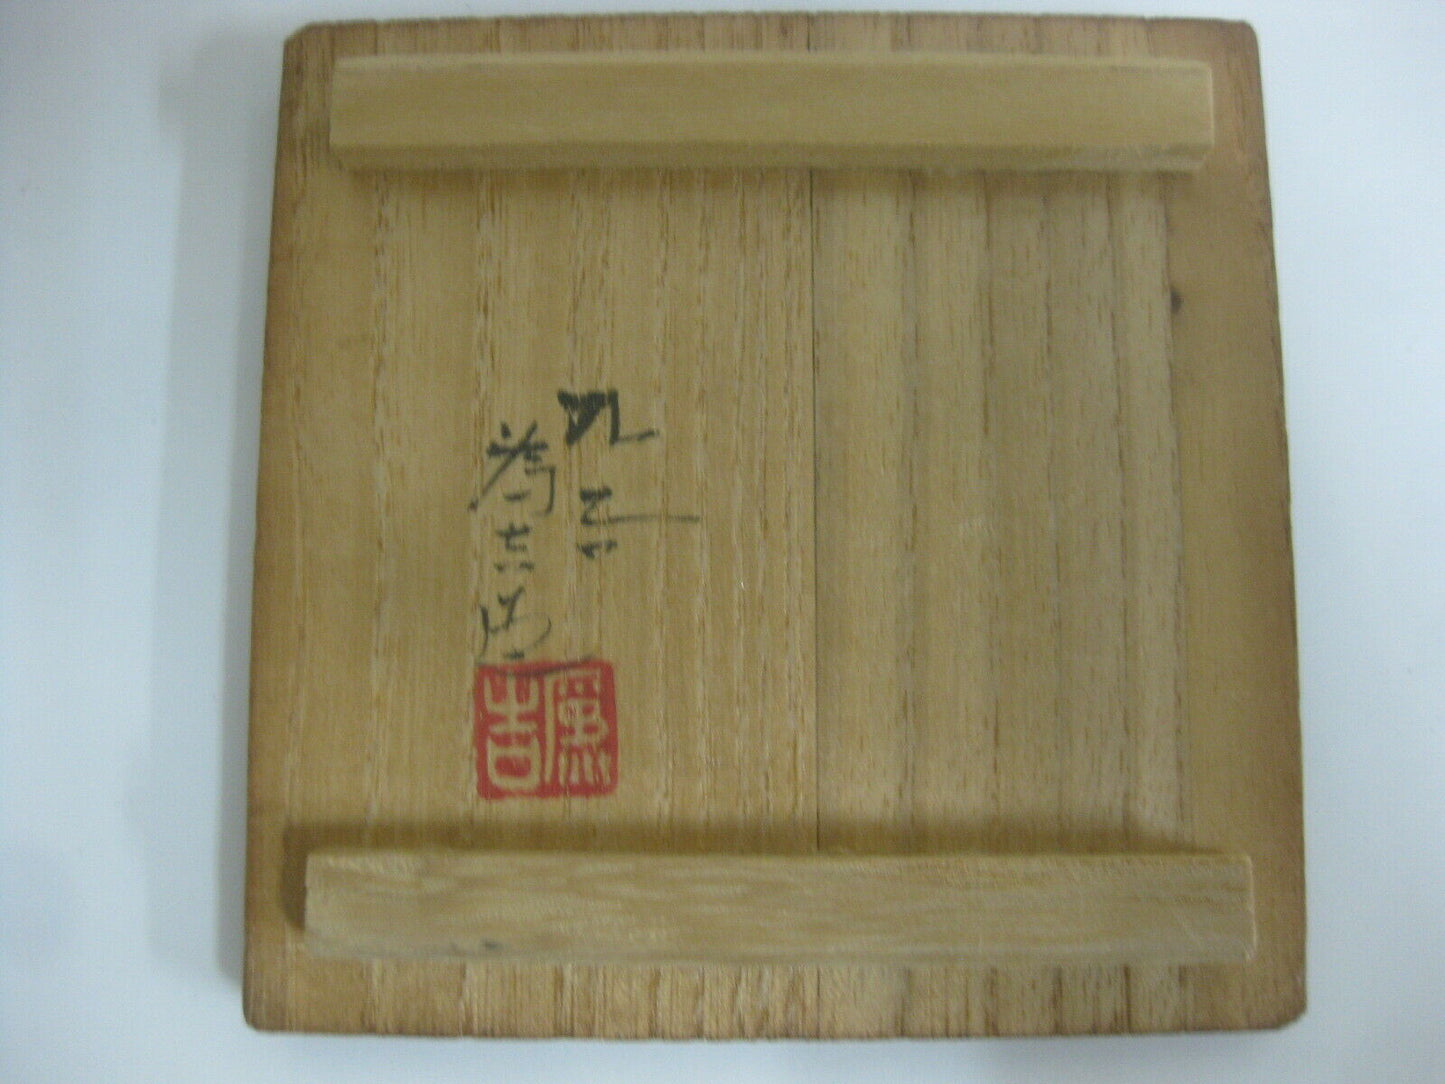 Y0055 KOURO Kutani-ware antique Incense Burner fragrance aroma japan